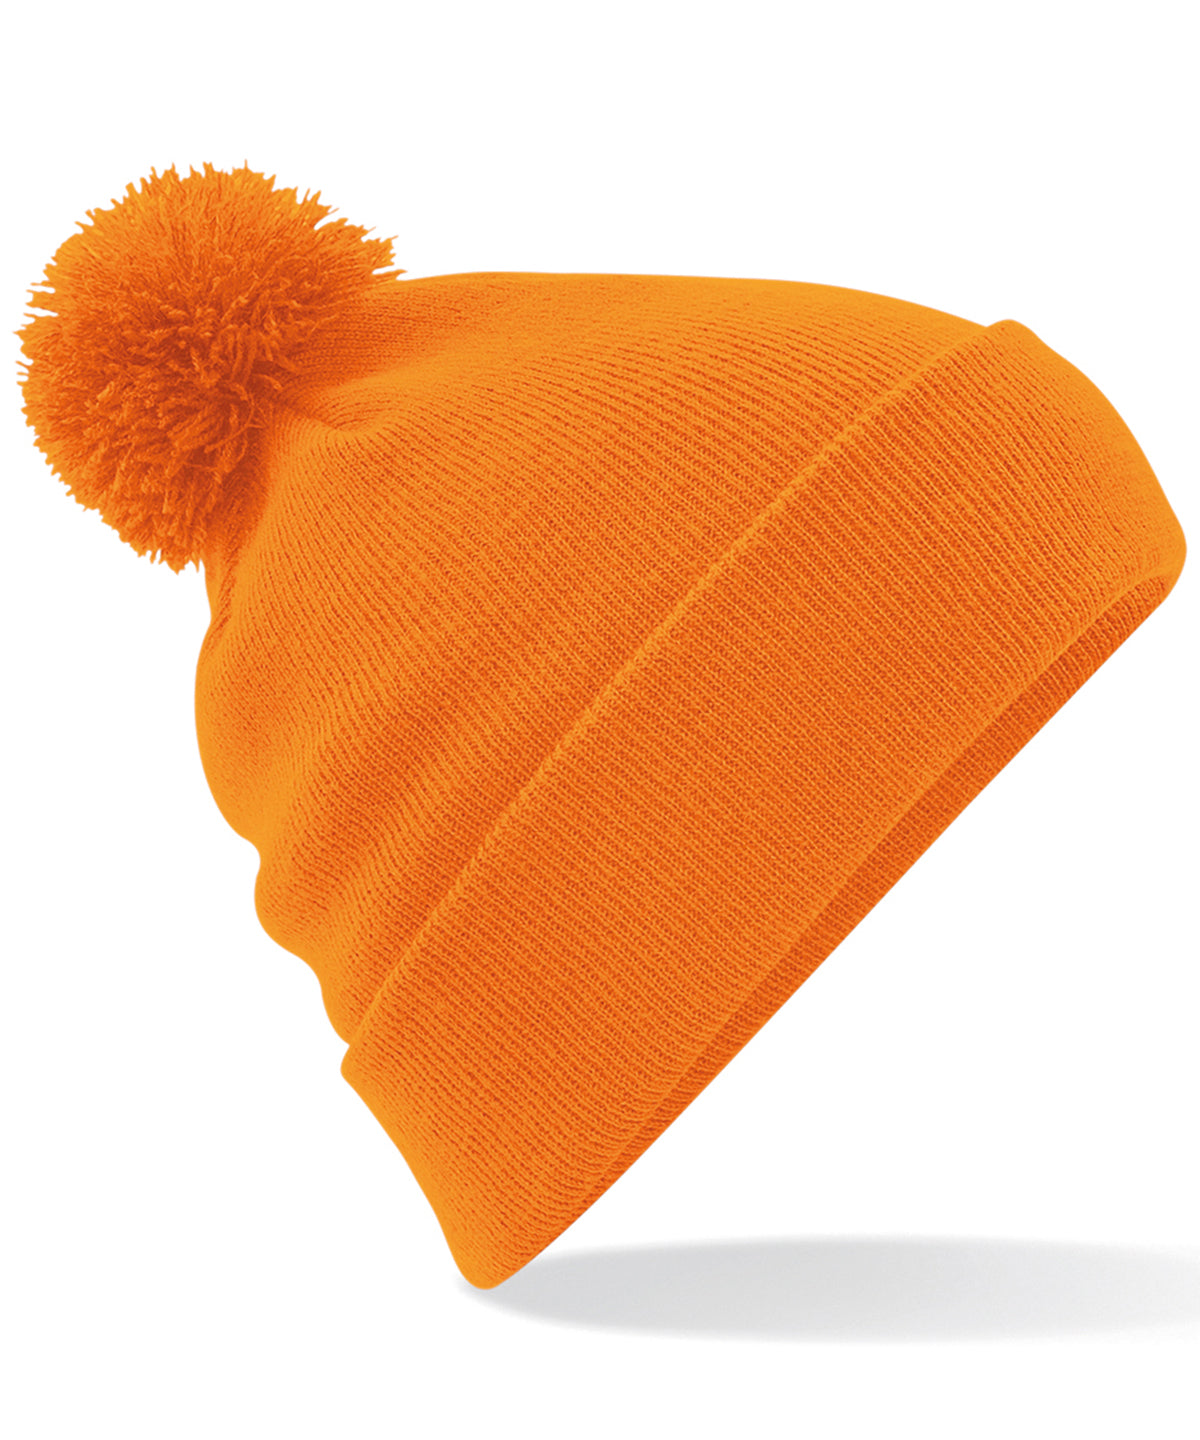 Personalised Hats - Mid Orange Beechfield Original pom pom beanie